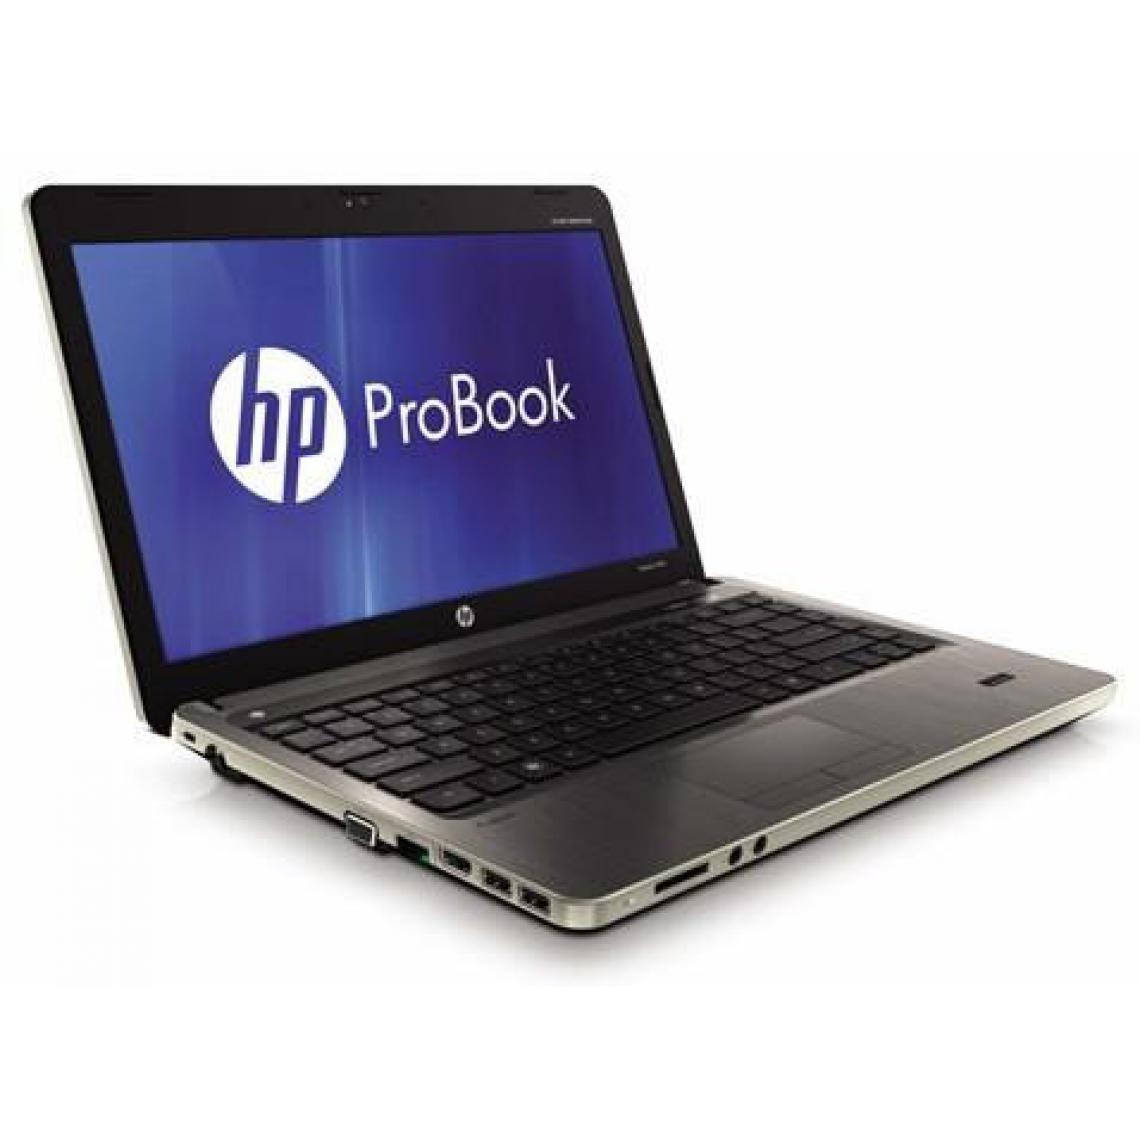 Hp - HP 6460B (6460B8240i5) - PC Portable